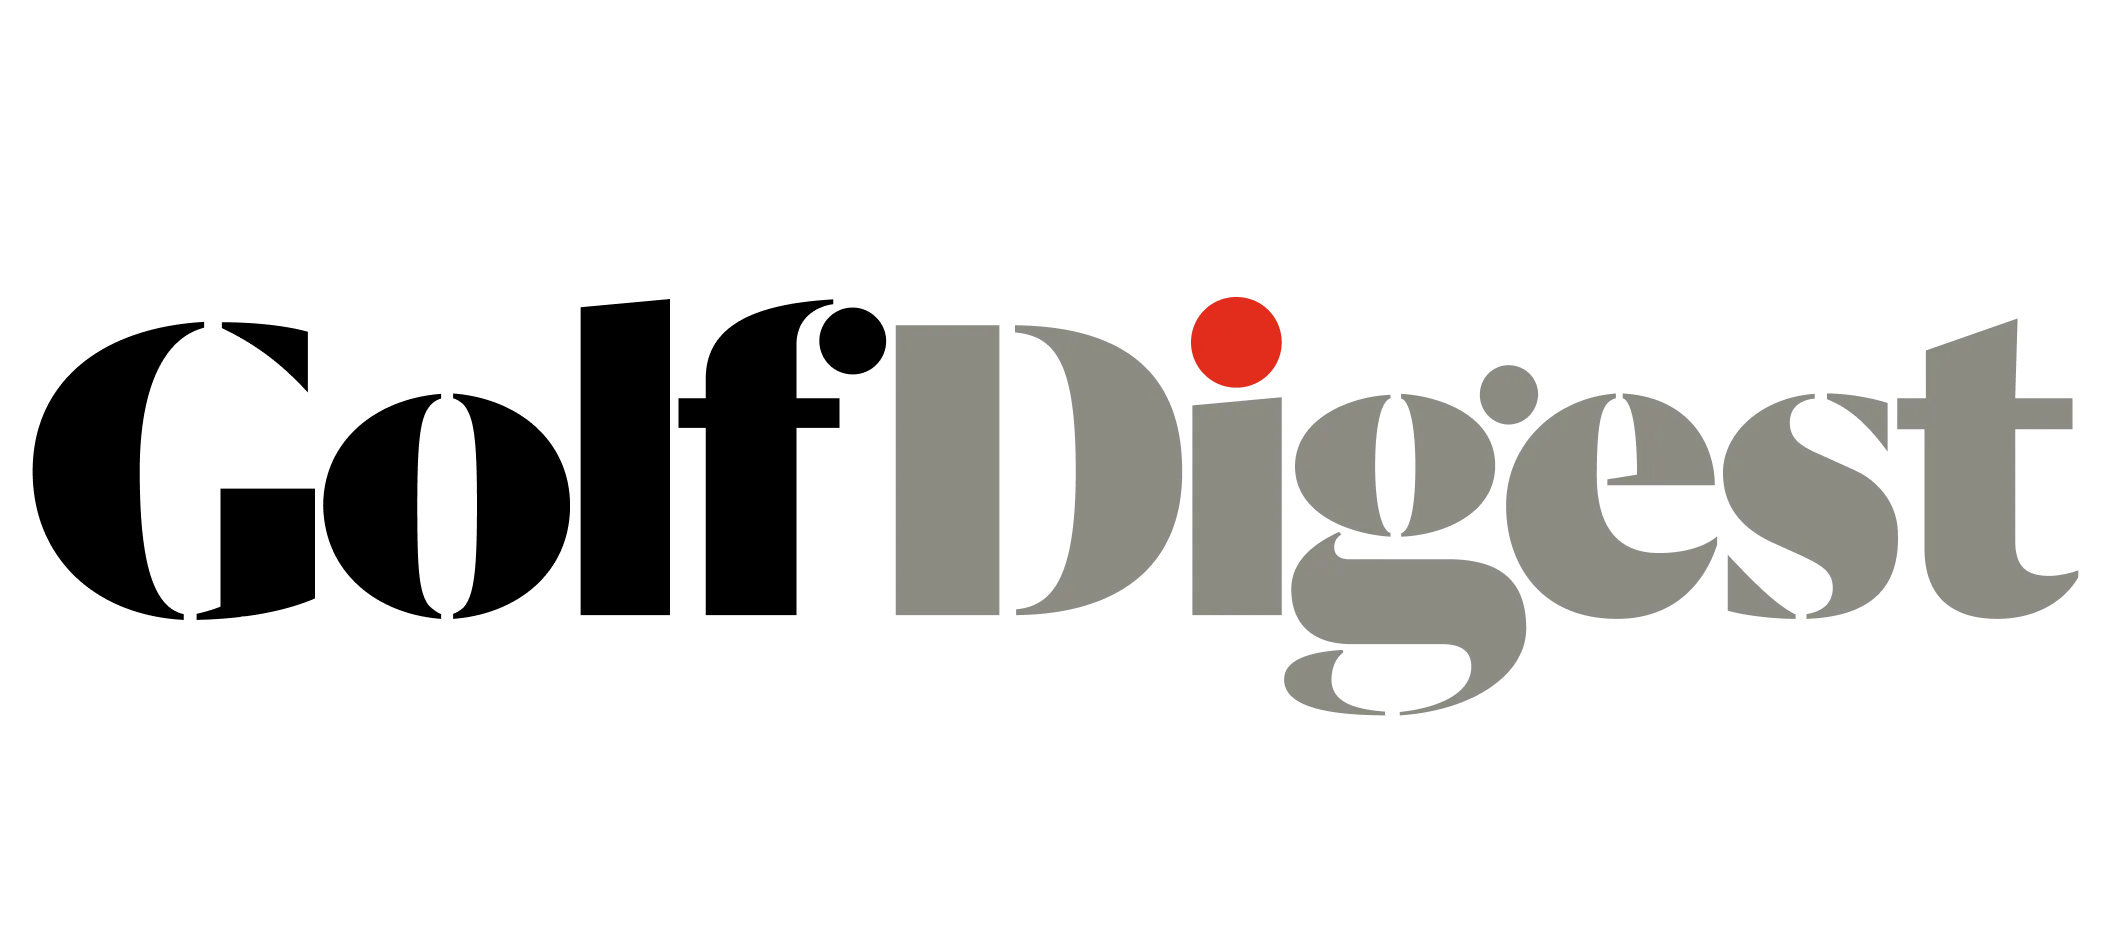 Golf Digest logo